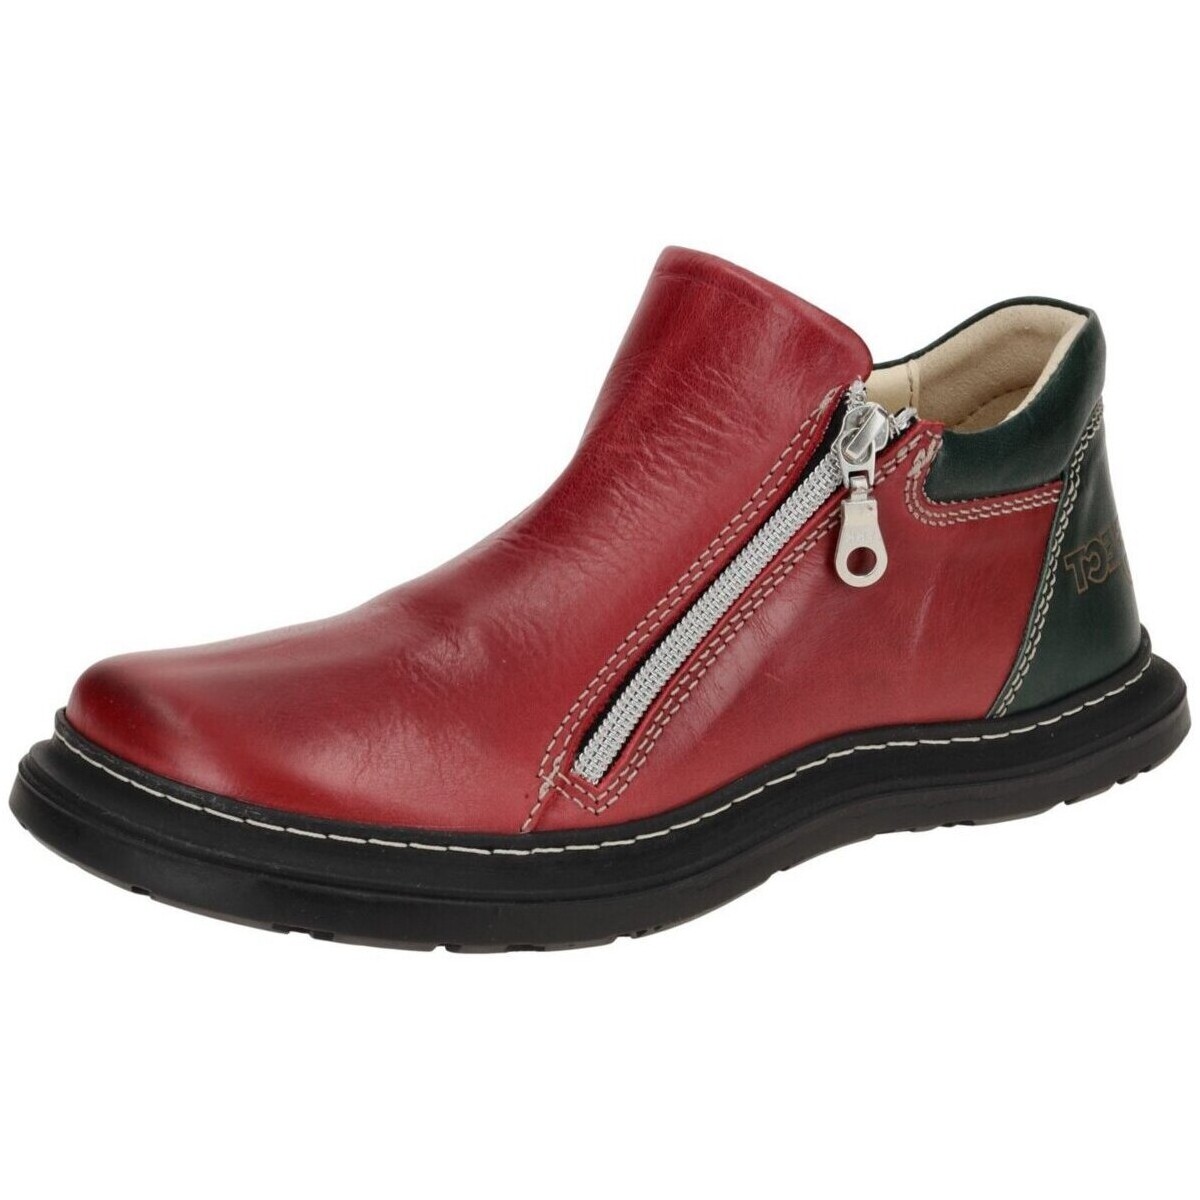 Schuhe Damen Slipper Eject Slipper Sony2 Schuhe grün 20712 20712/1 Rot